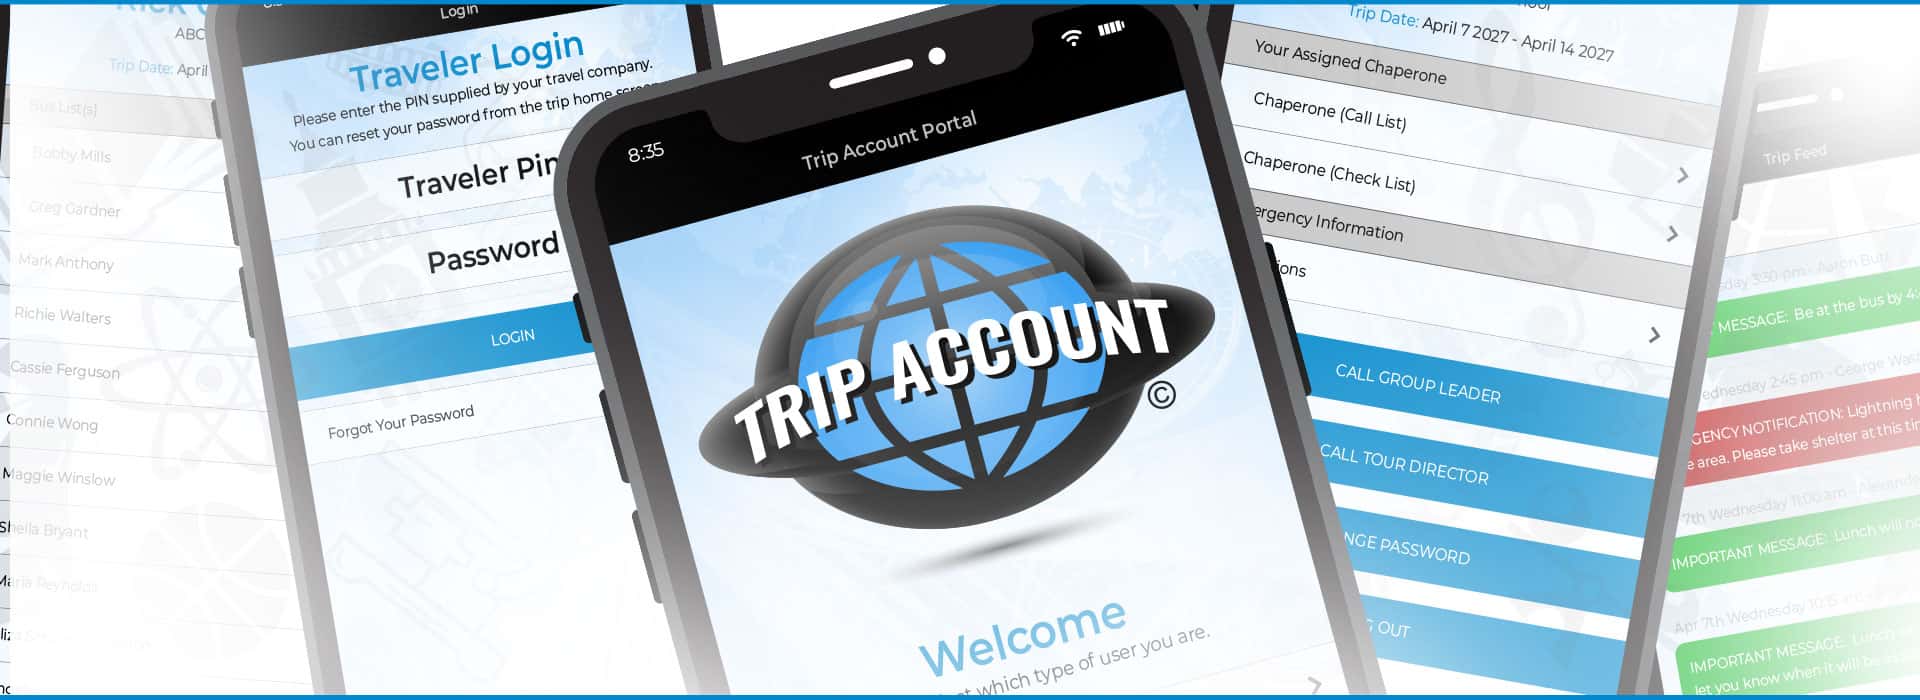 Trip Account App Preview